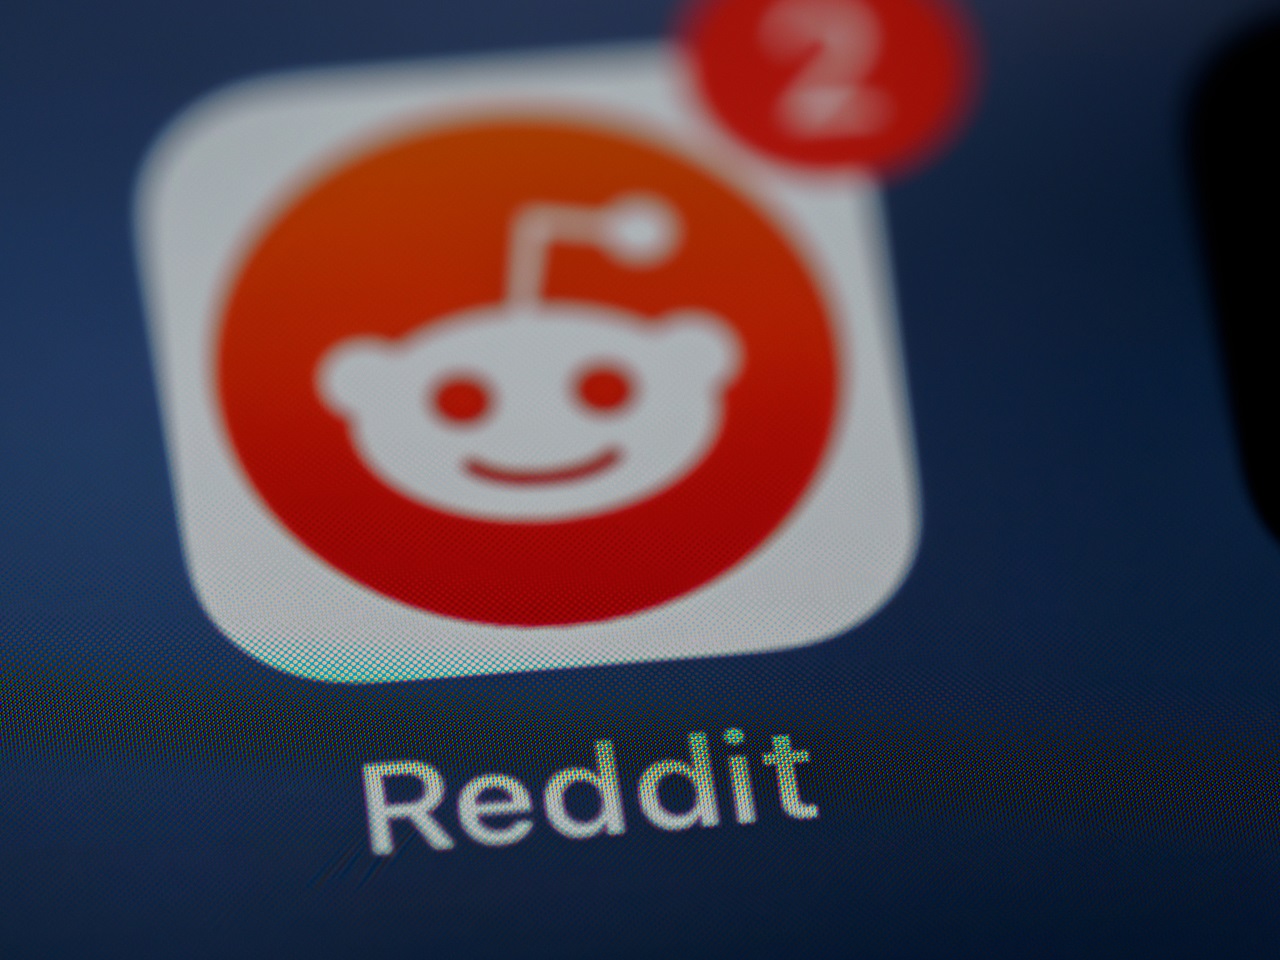 Reddit icon on smartphone screen